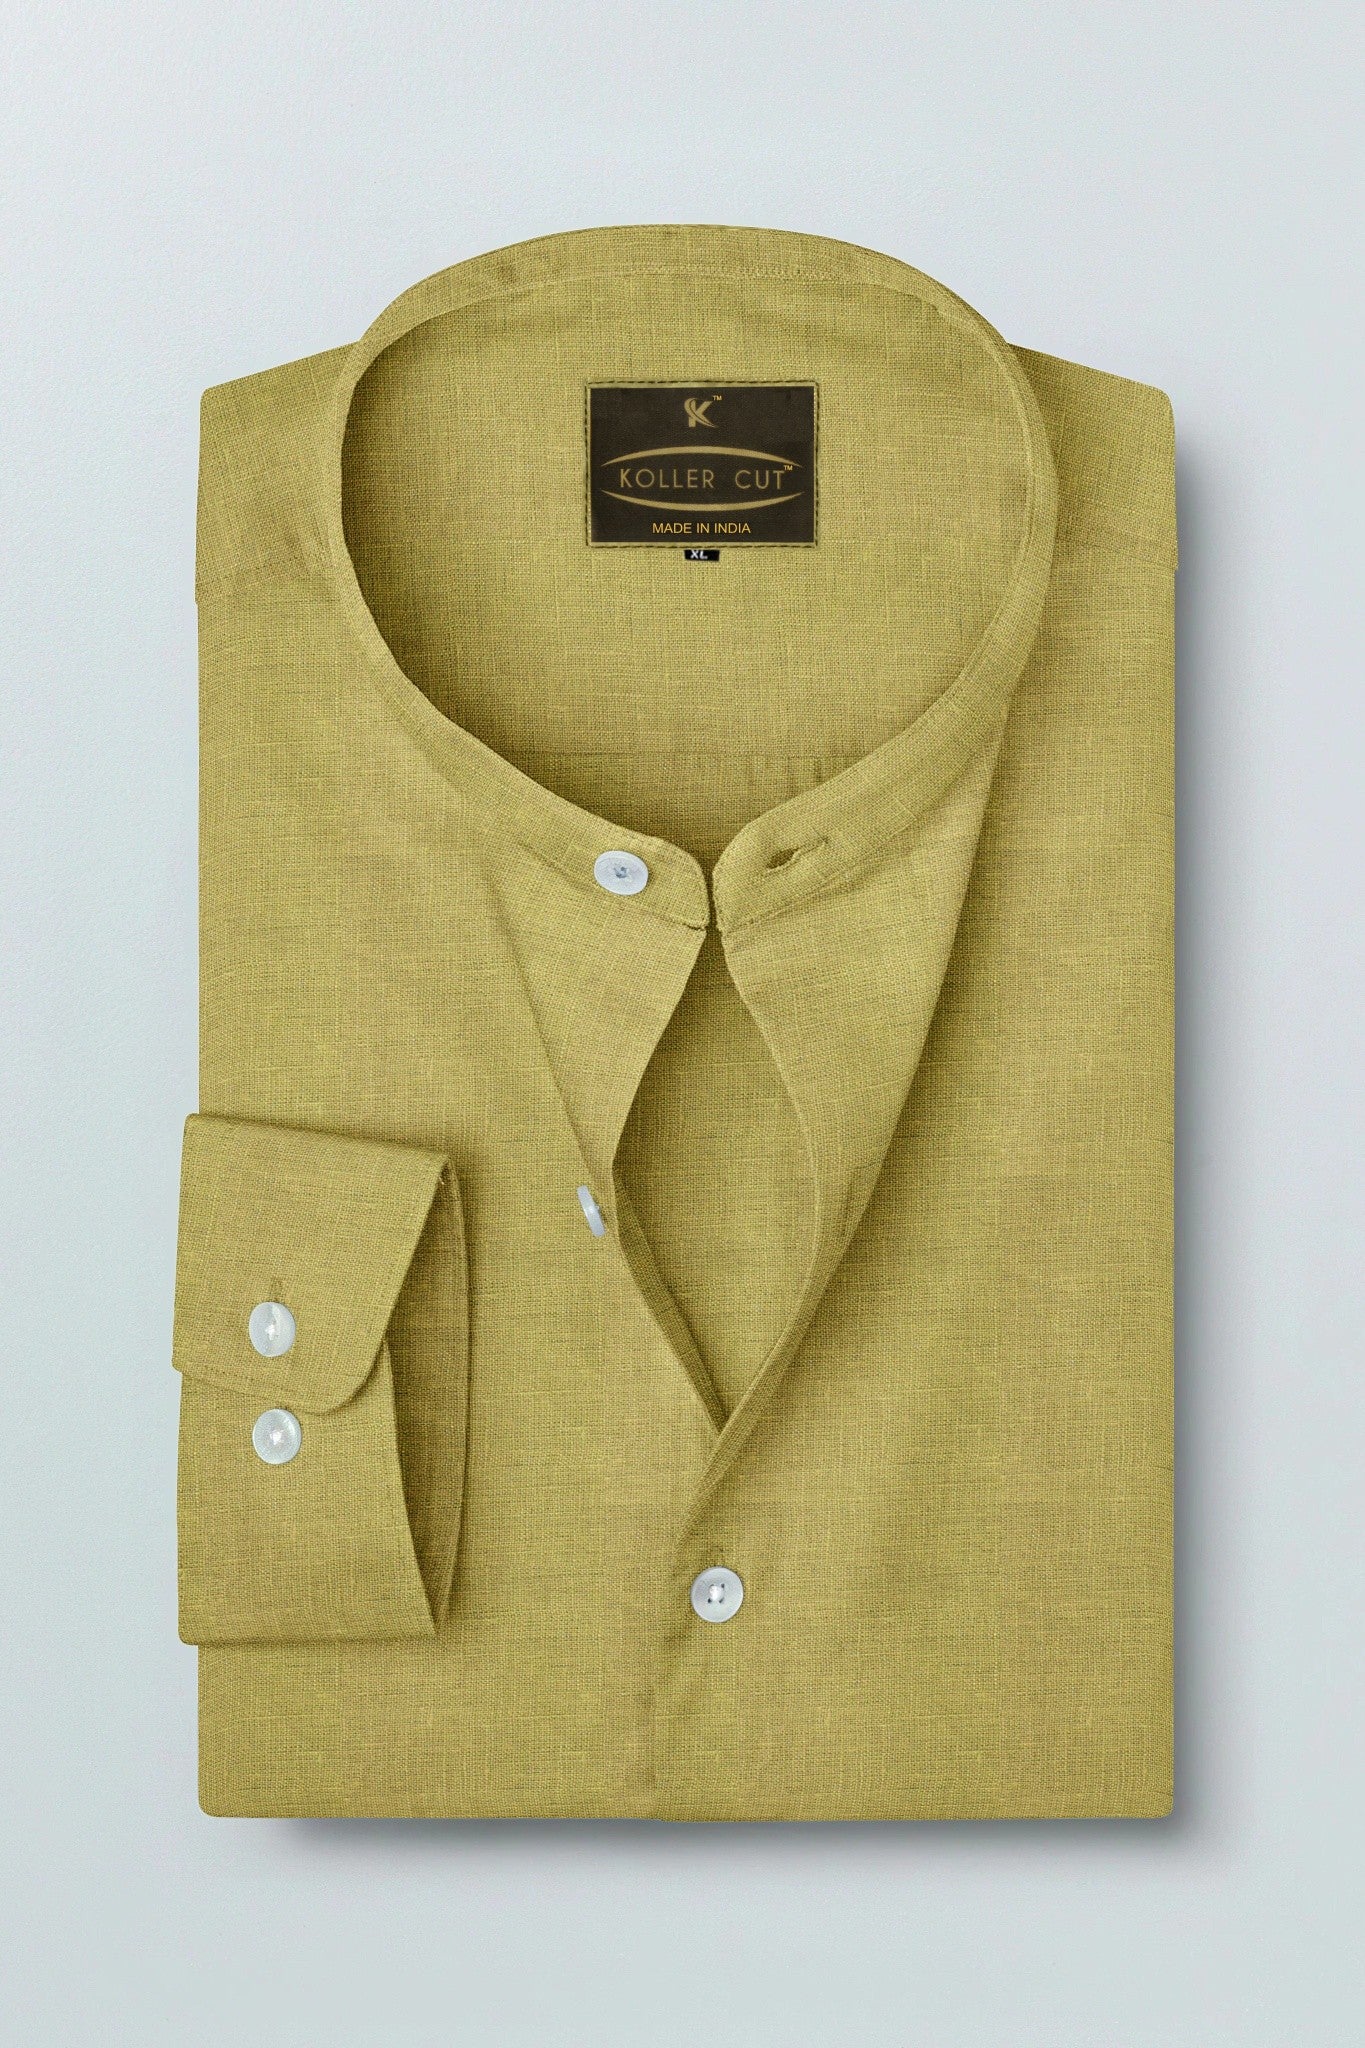 Dark Khaki Mandrin collar Luxurious Linen Shirt